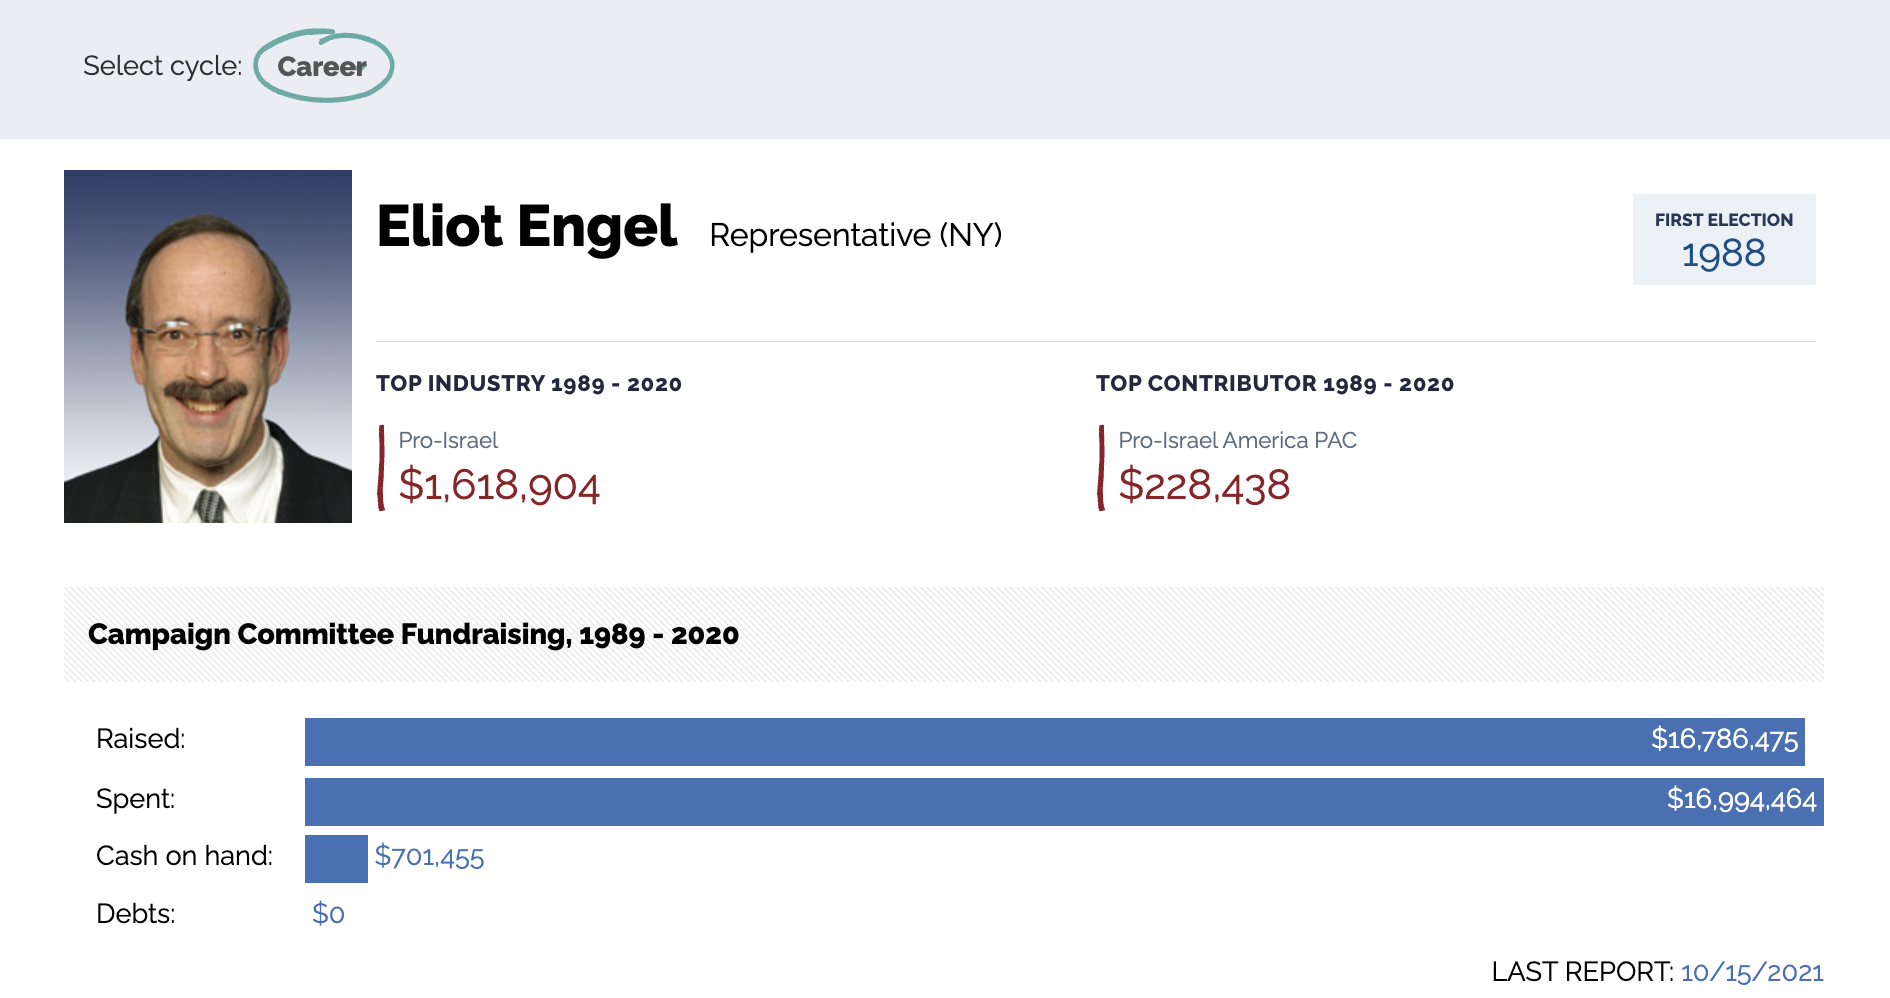 Eliot Engel's Campaign Fundraising Sources